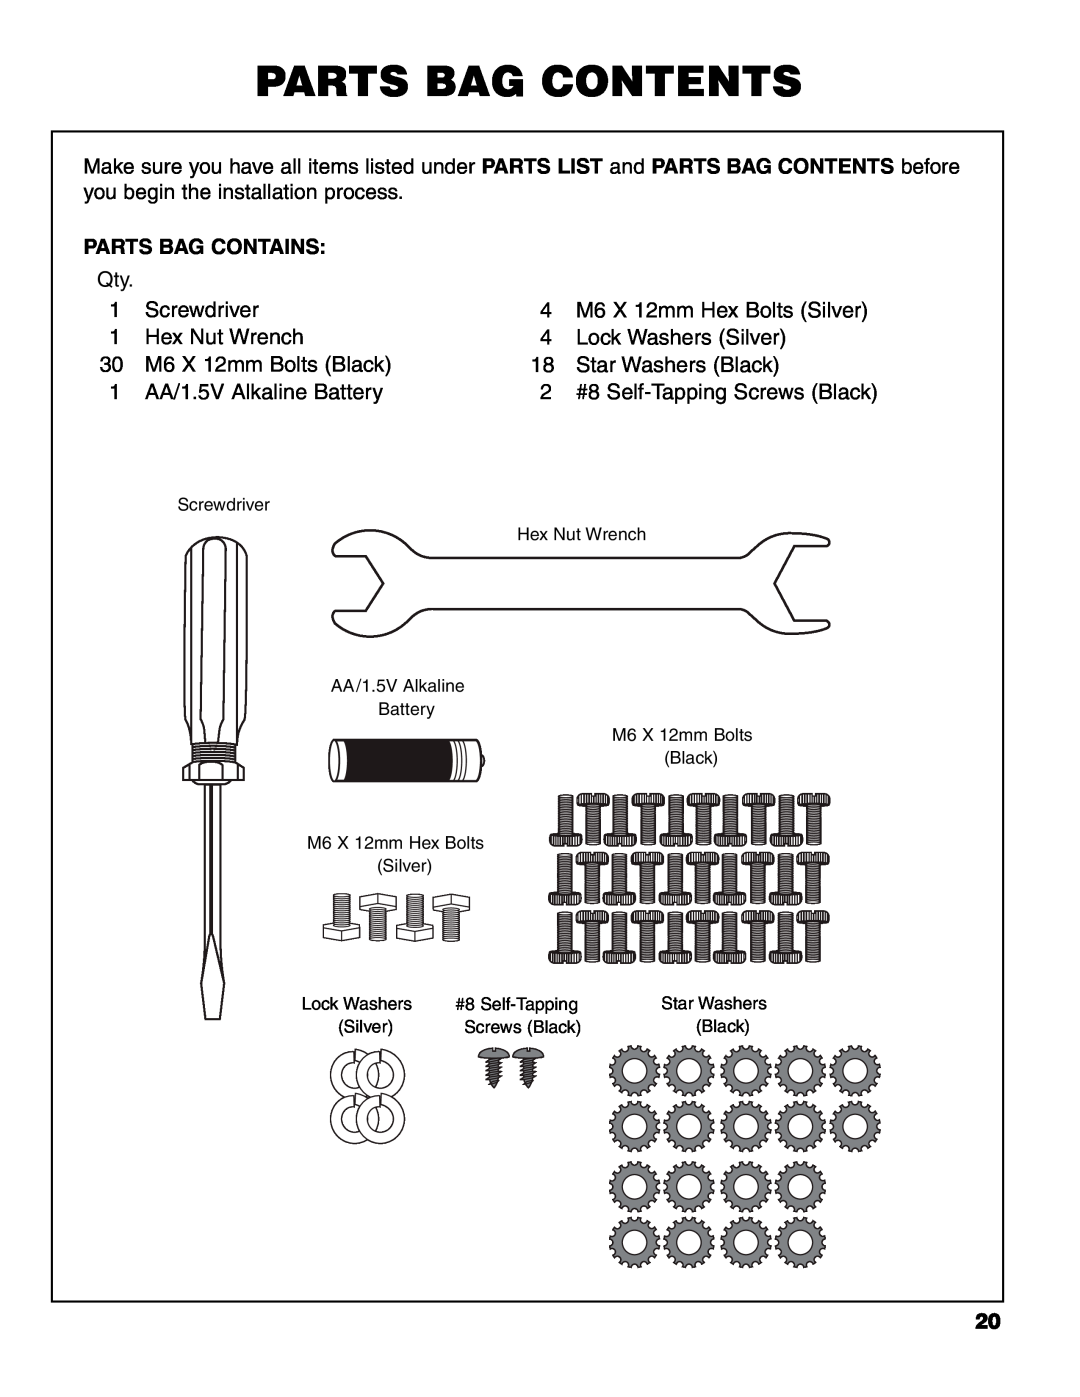 Brinkmann 7541 Series owner manual Parts Bag Contents, Parts Bag Contains 